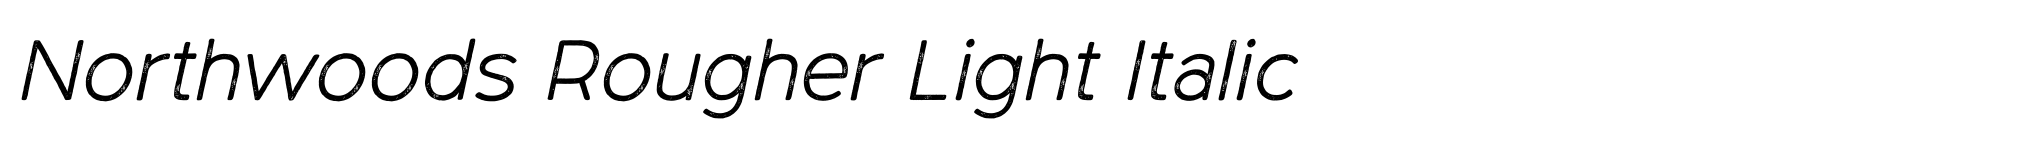 Northwoods Rougher Light Italic image